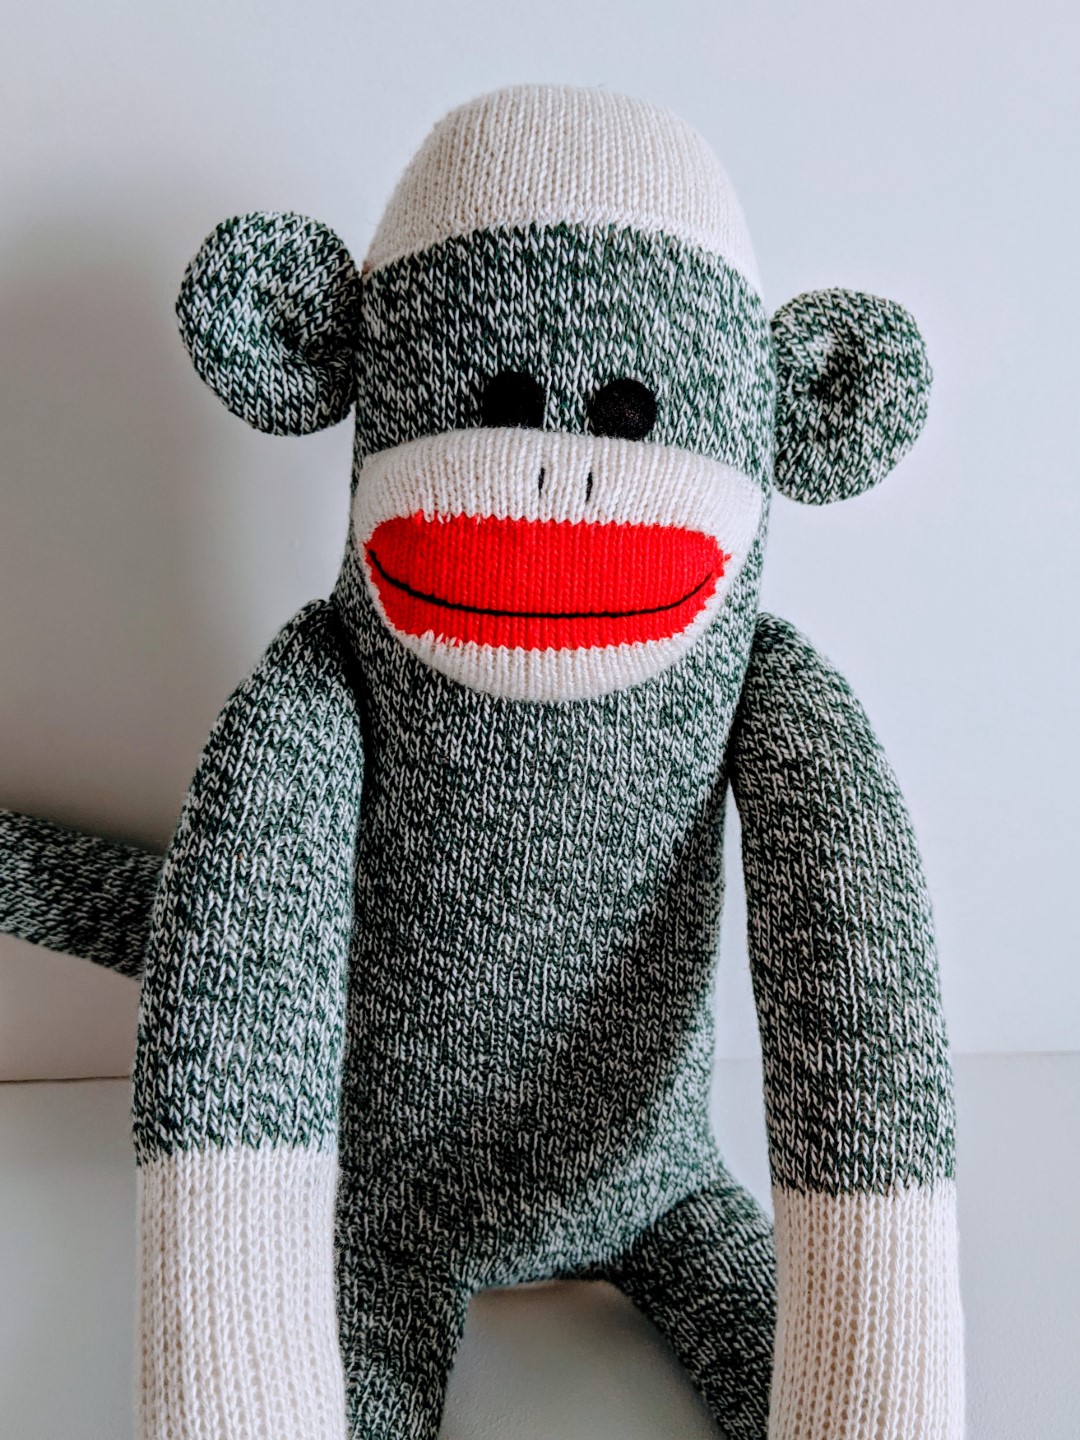 Green Sock Monkey – Traditional Red Heel